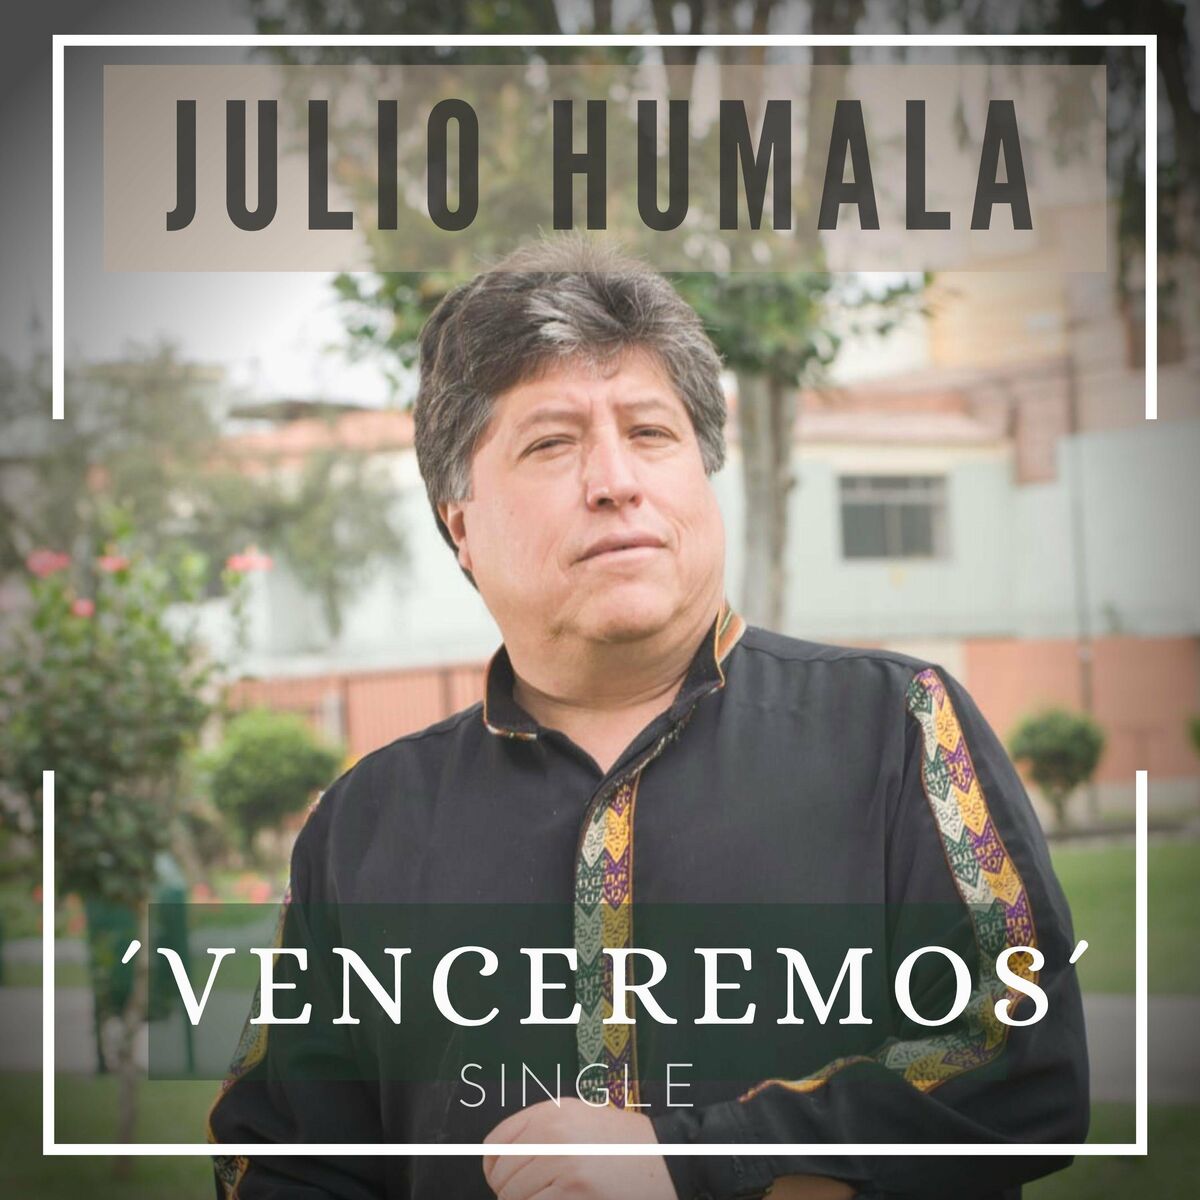 Julio Humala Concert